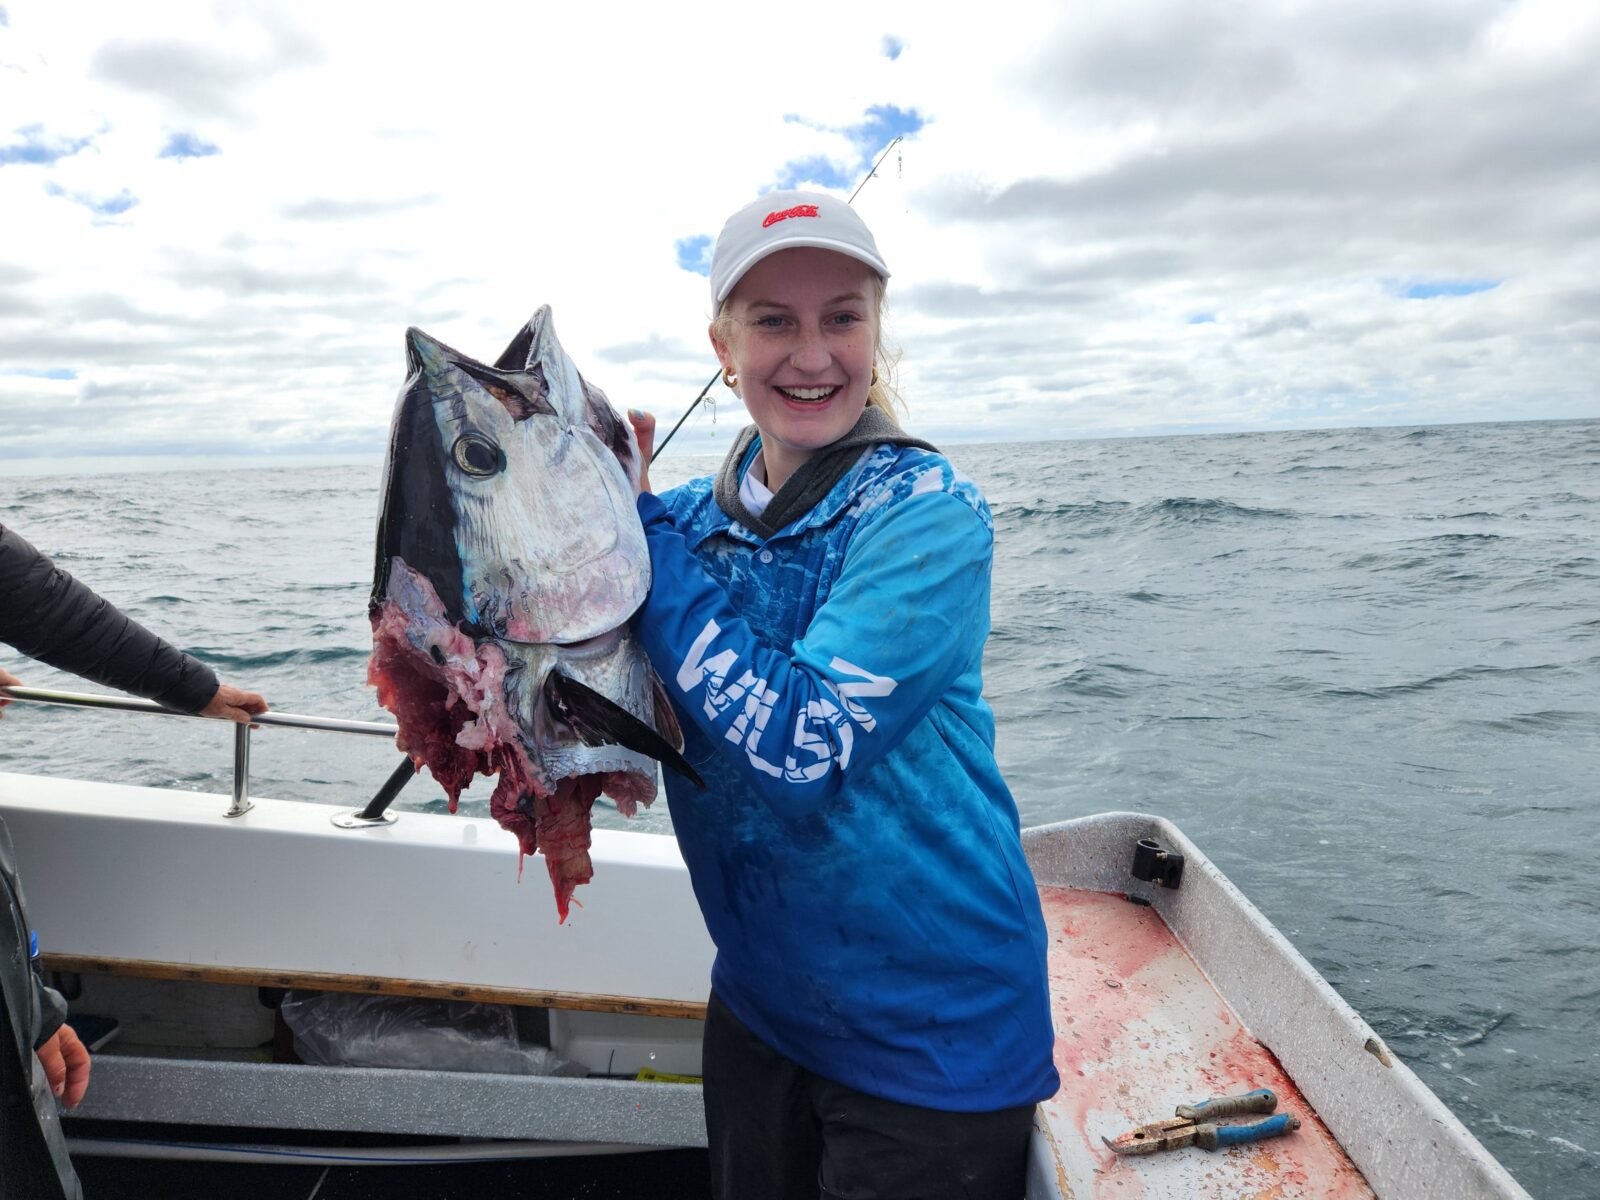 Cassie got Sharked in South Australia while fishing for Tuna off Kangaroo Island